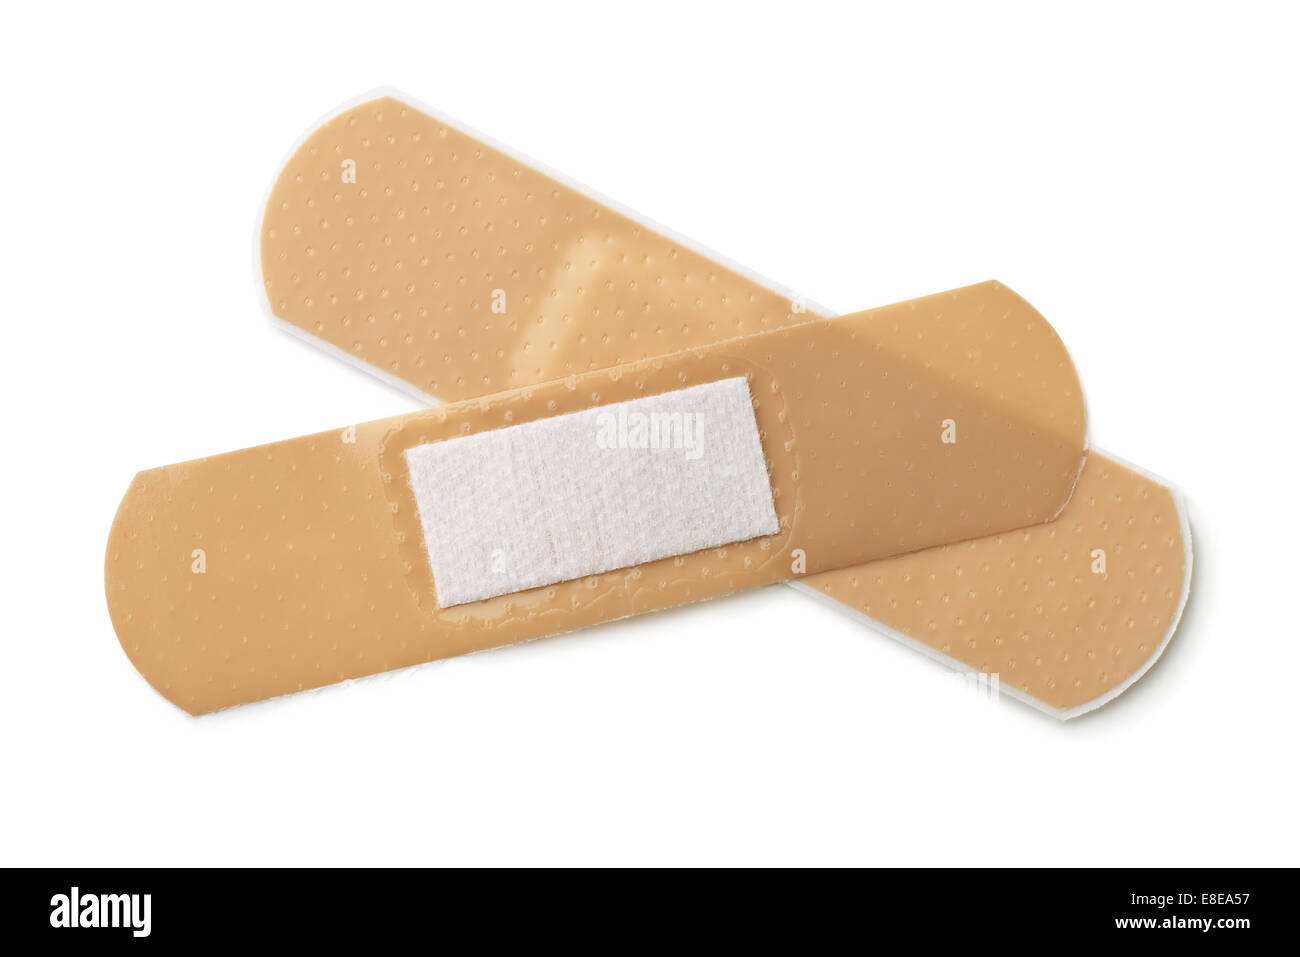 Two pieces of adhesive bandage isolated on white Stock Photo